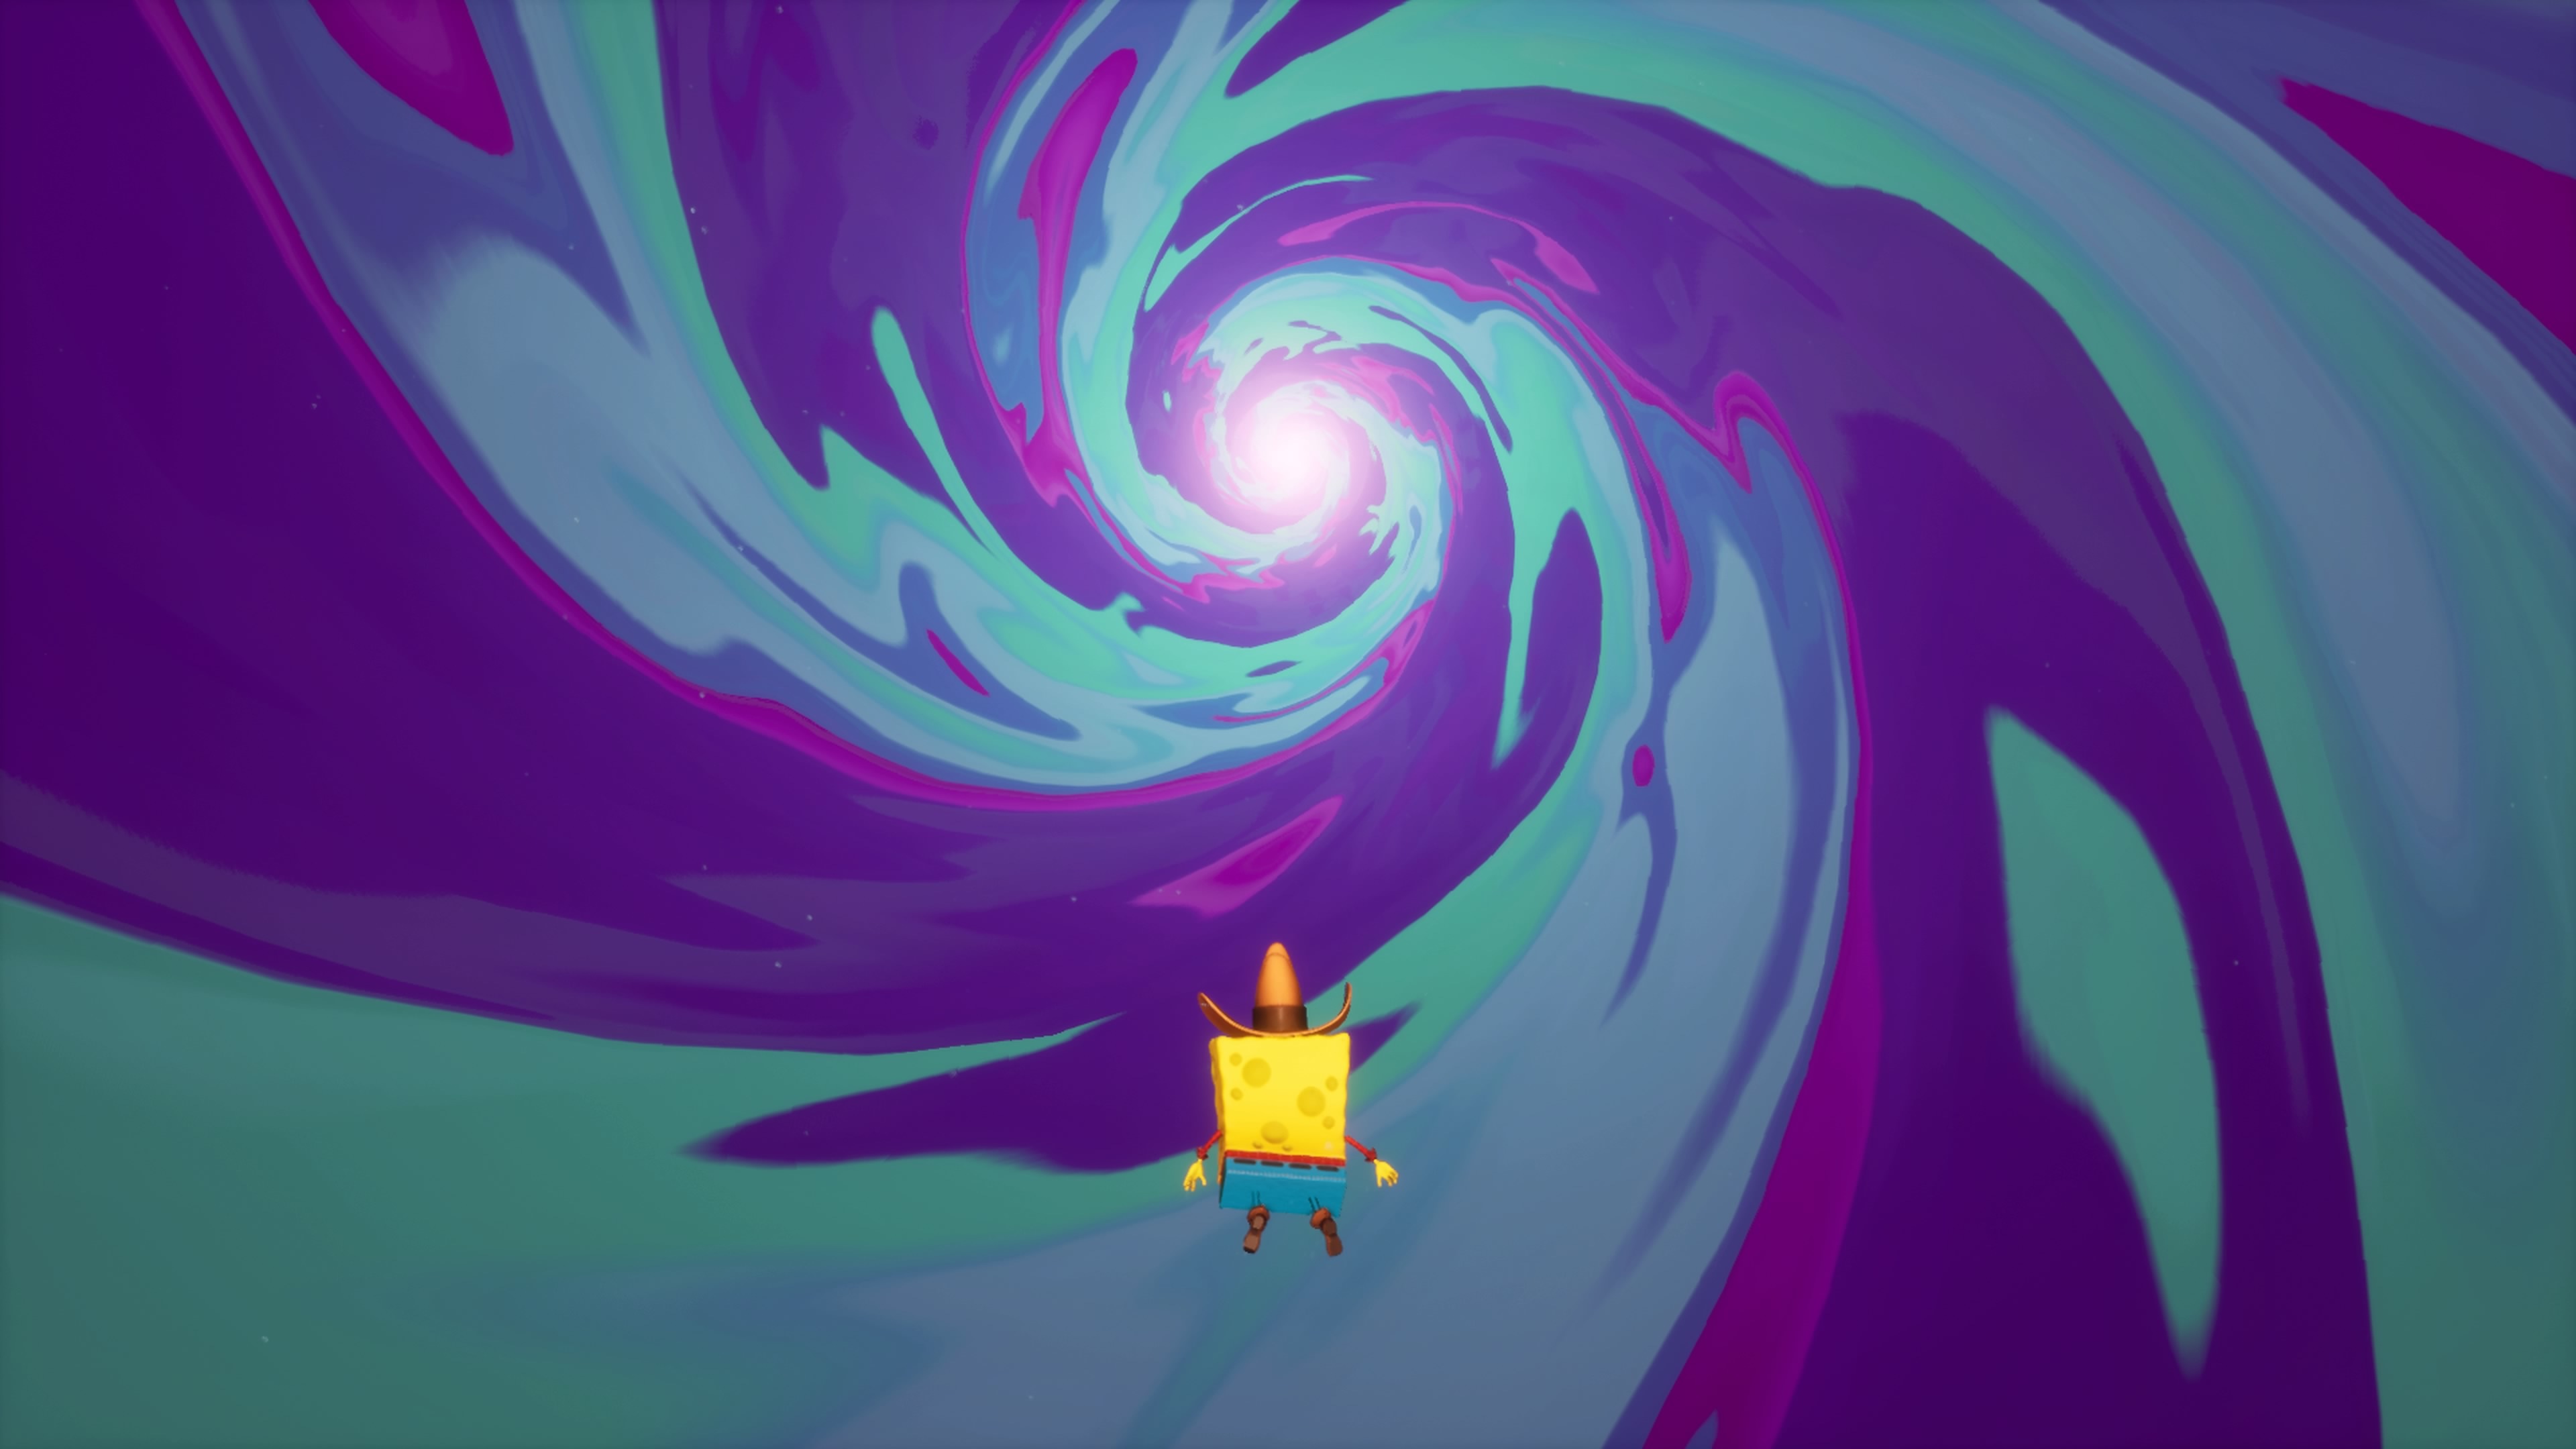 Мультивселенная Губки Боба: Обзор SpongeBob SquarePants: The Cosmic Shake